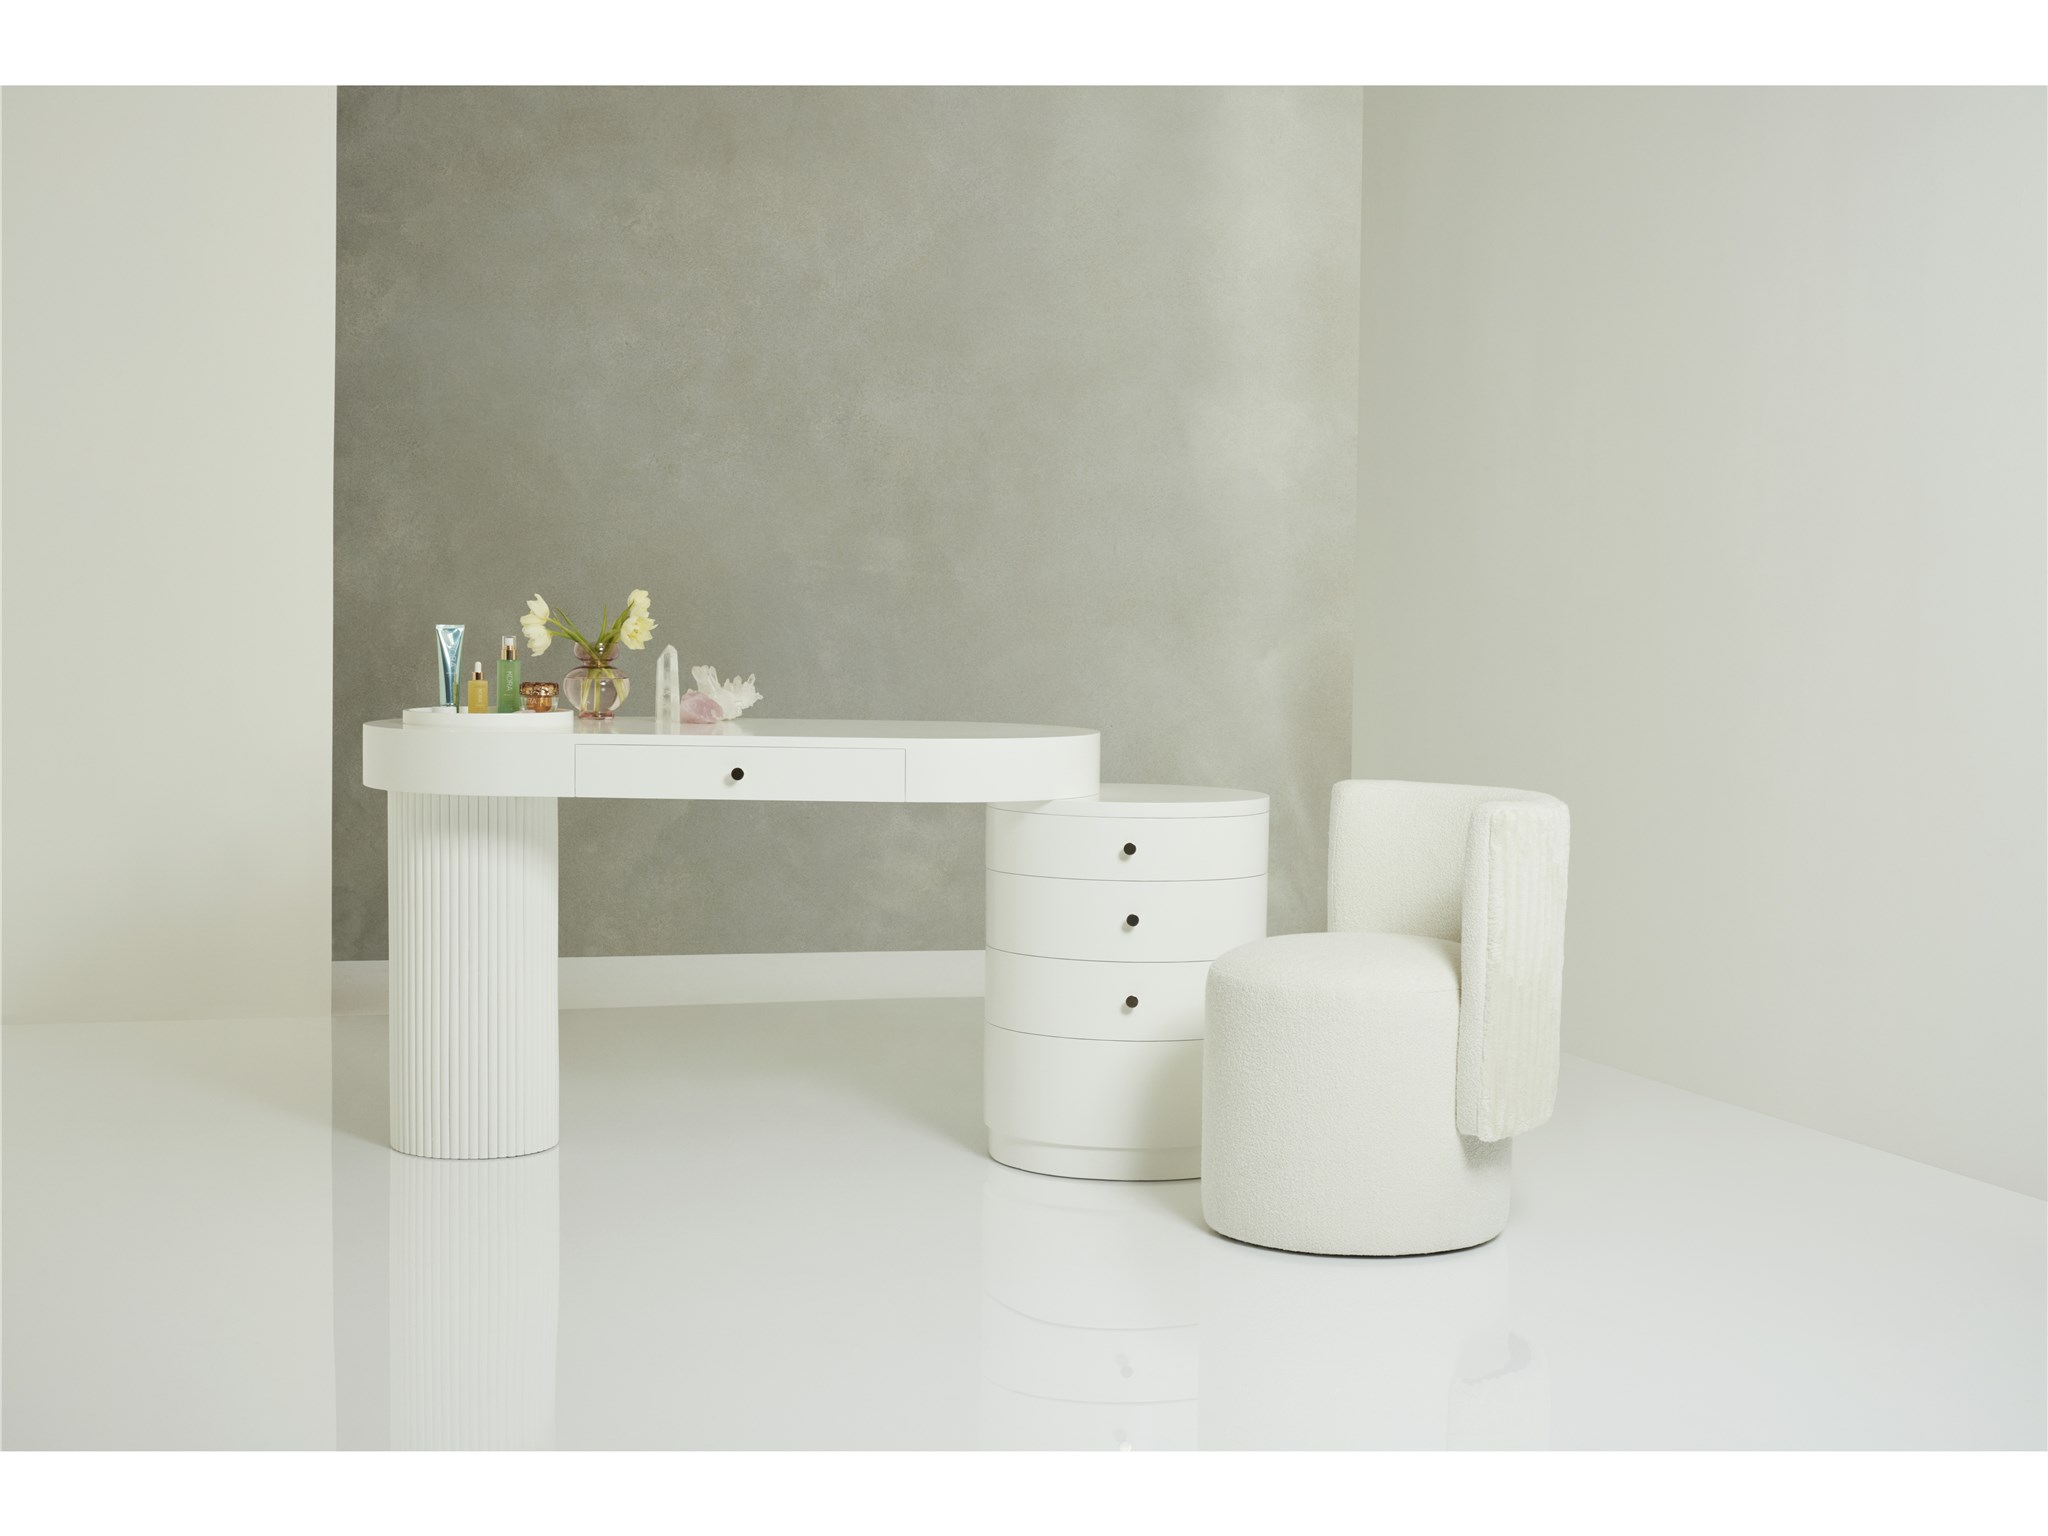 Tranquility - Miranda Kerr Home Mode Vanity Chair | Universal Furniture